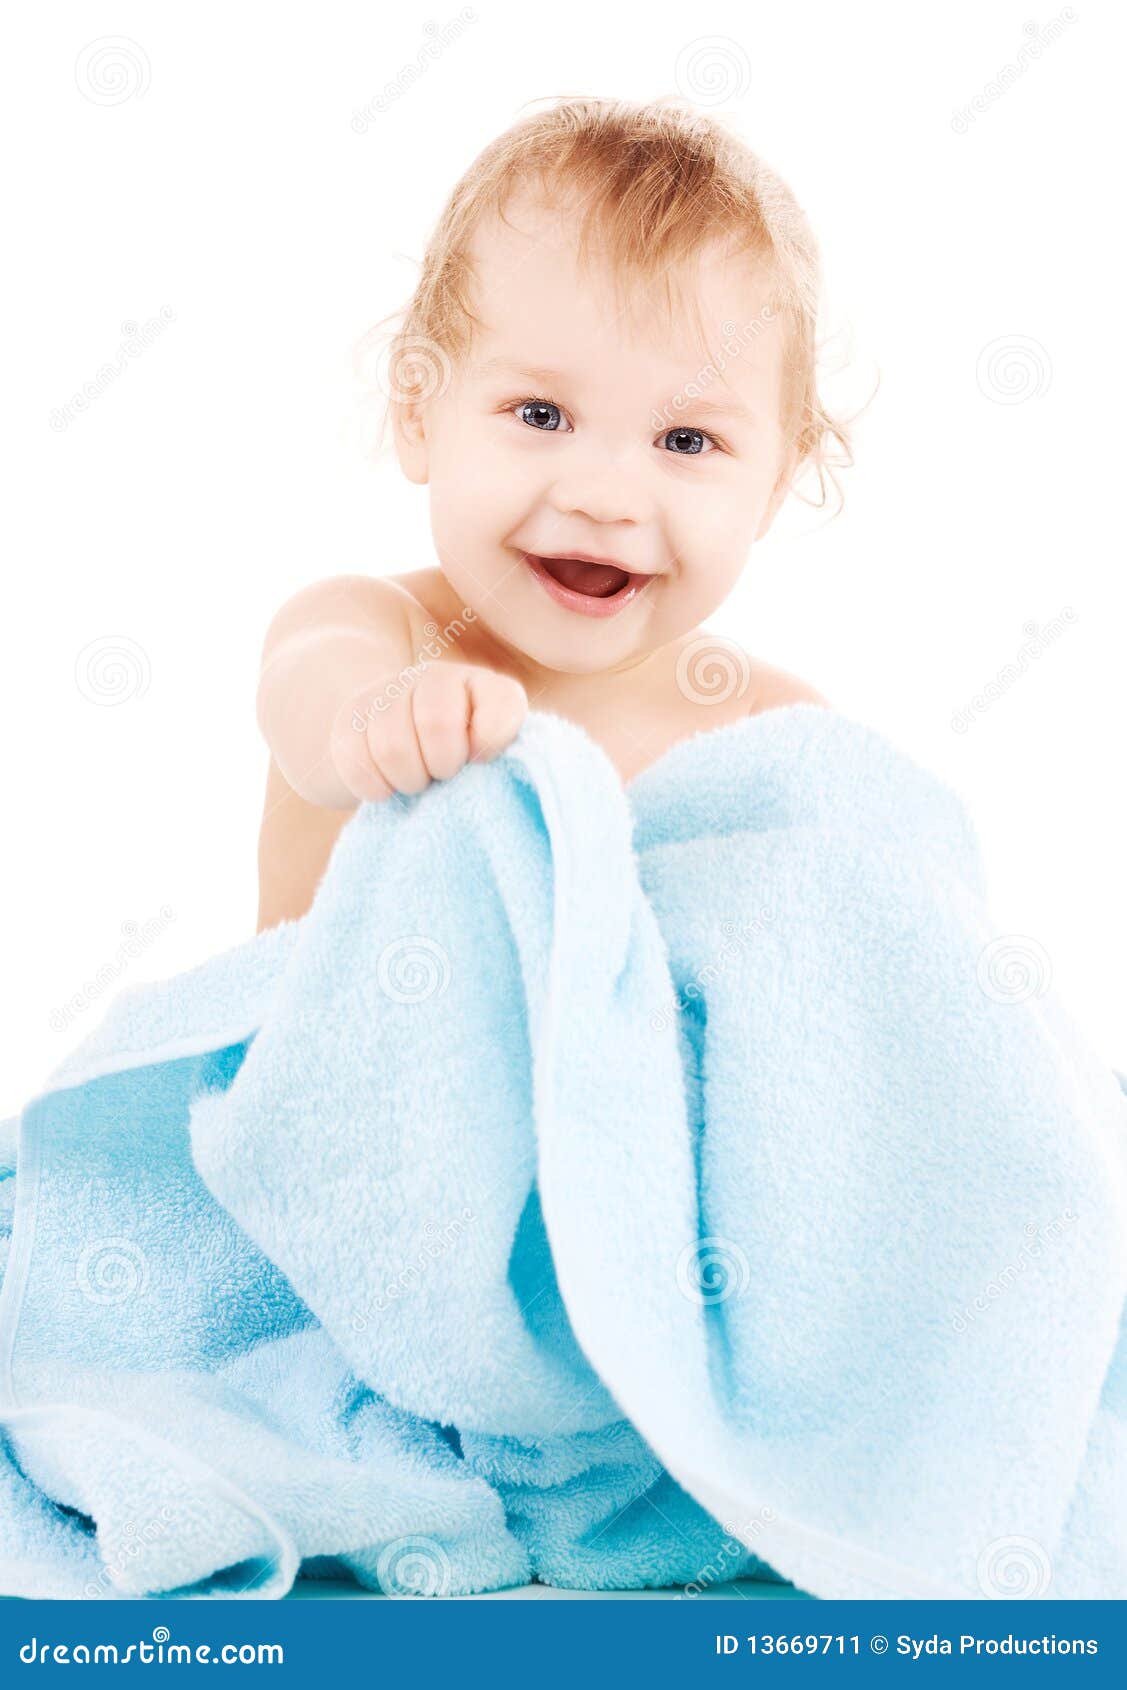 Baby with blue towel stock image. Image of funny, joyful - 13669711